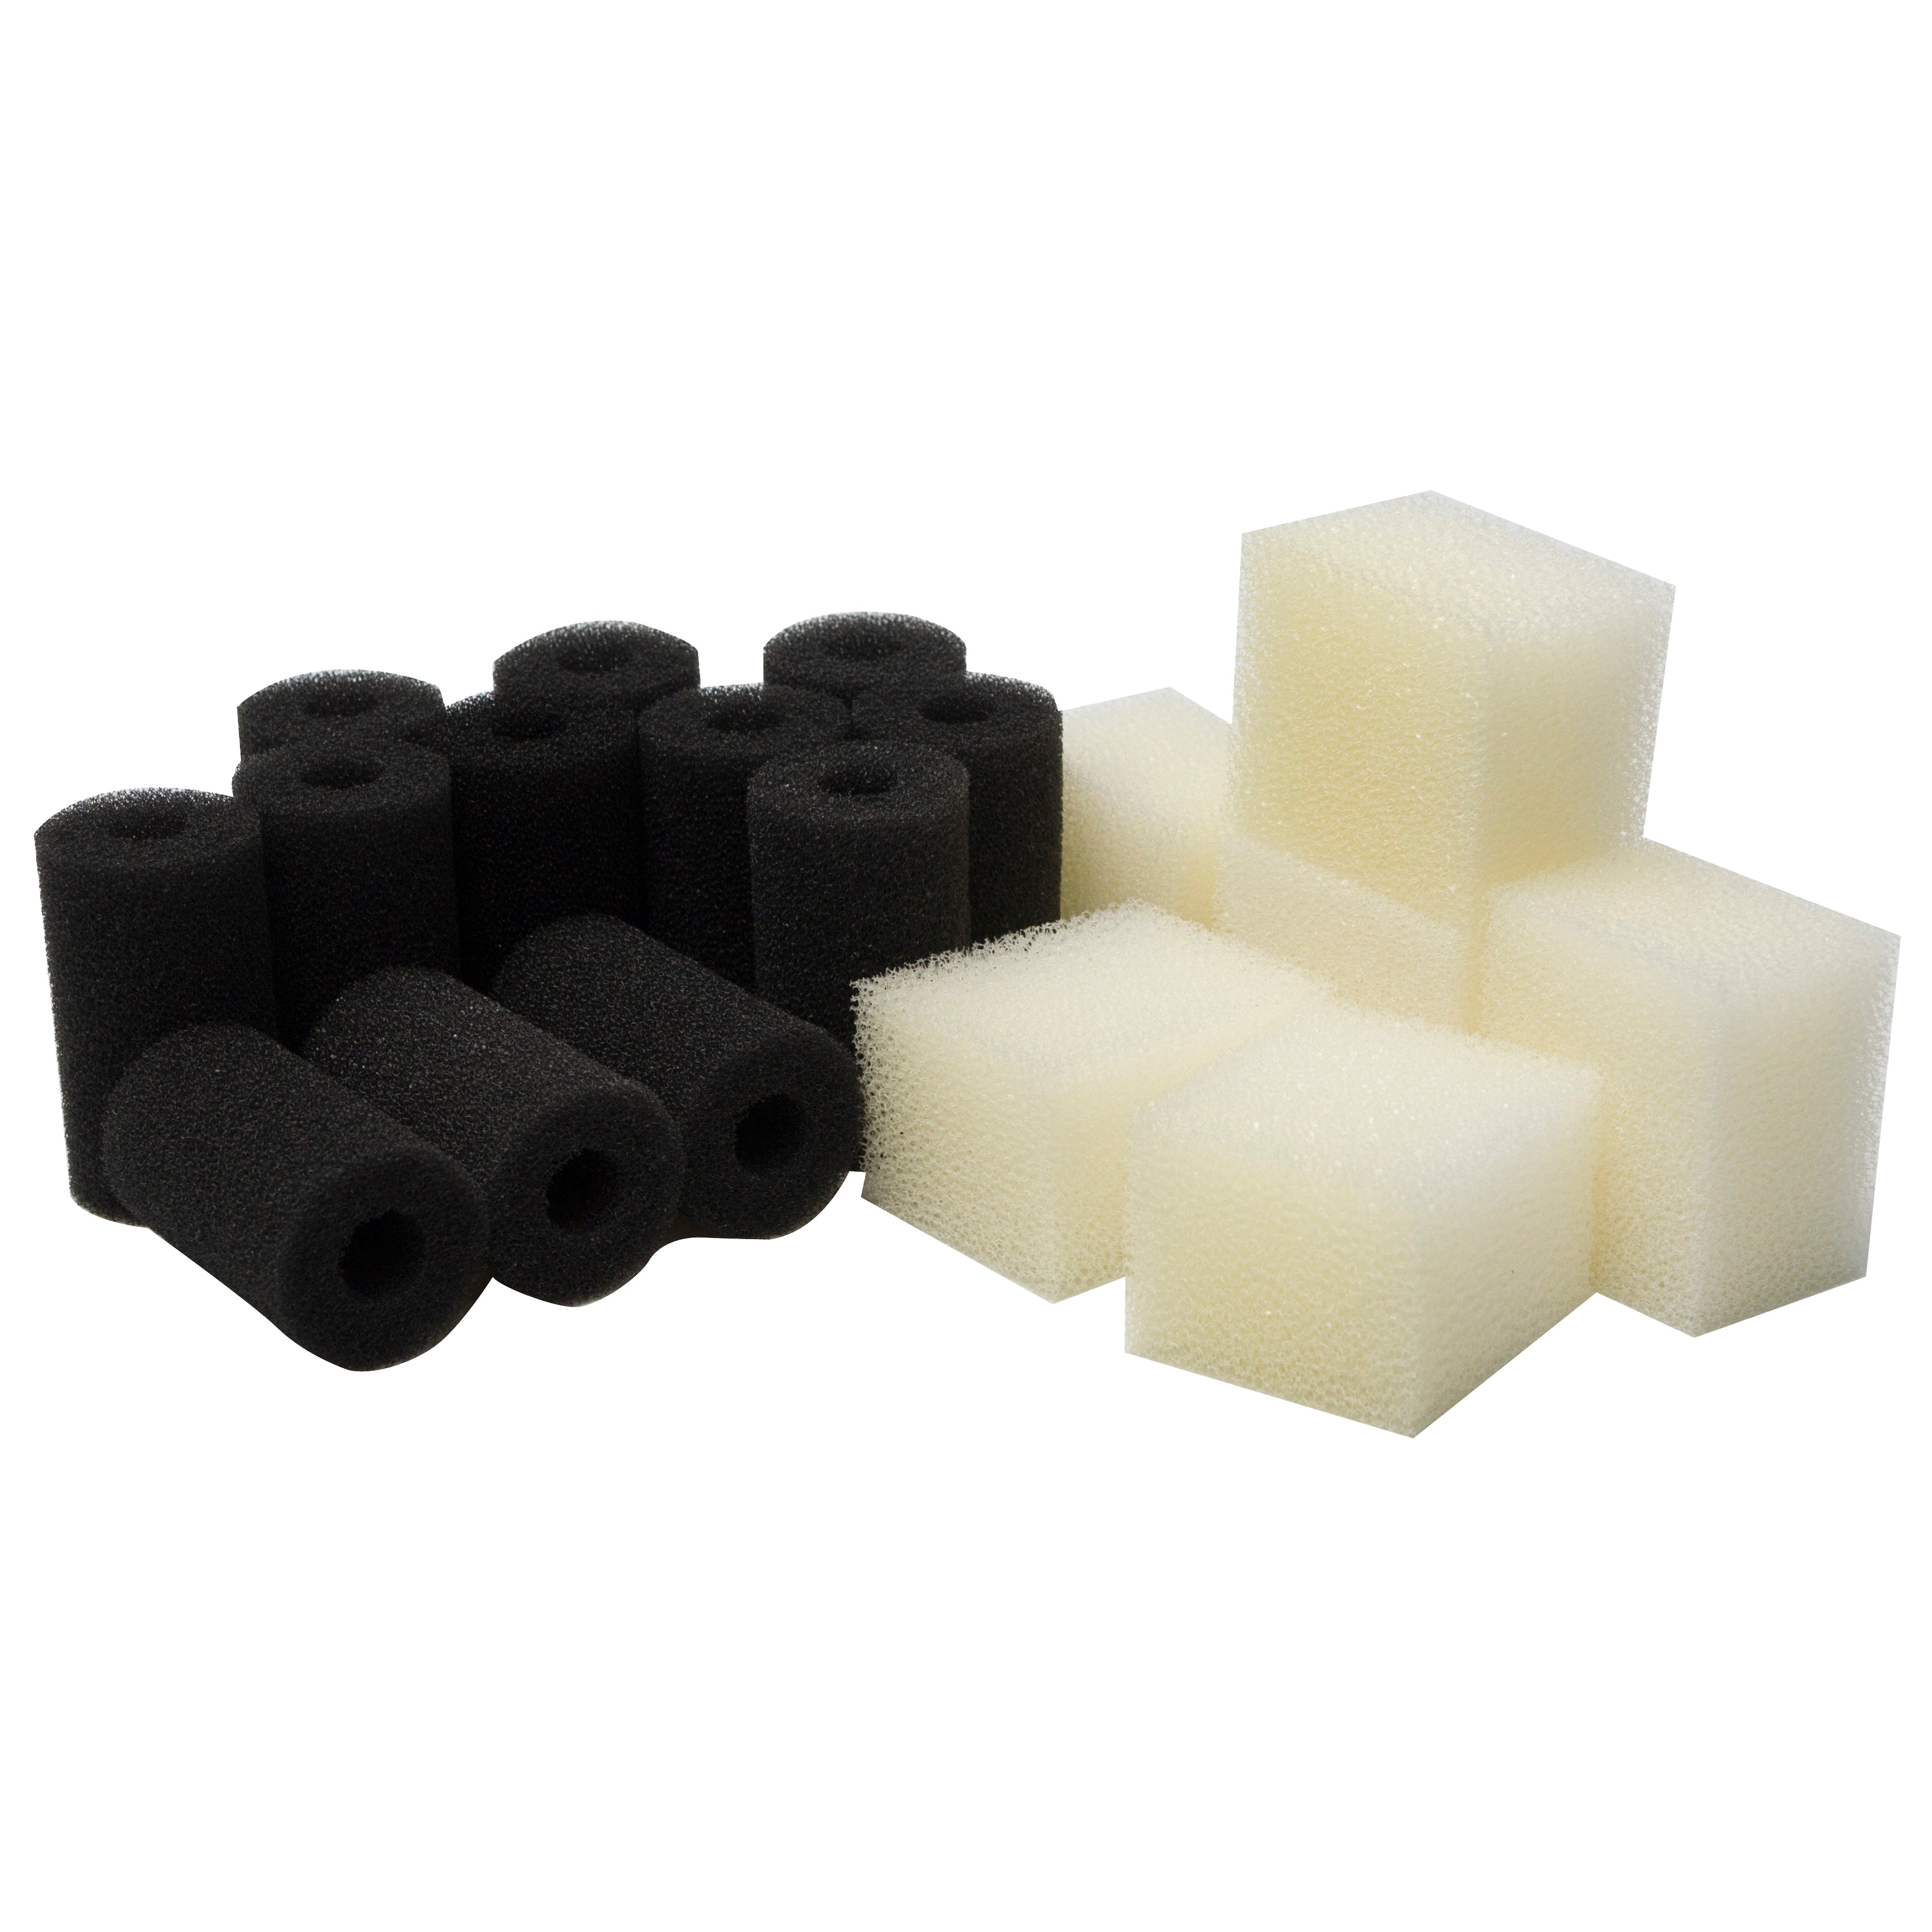 LTWHOME Pre-Filter Sponges and Compatible Foam Filter Pads Suitable for Fluval Edge Aquarium